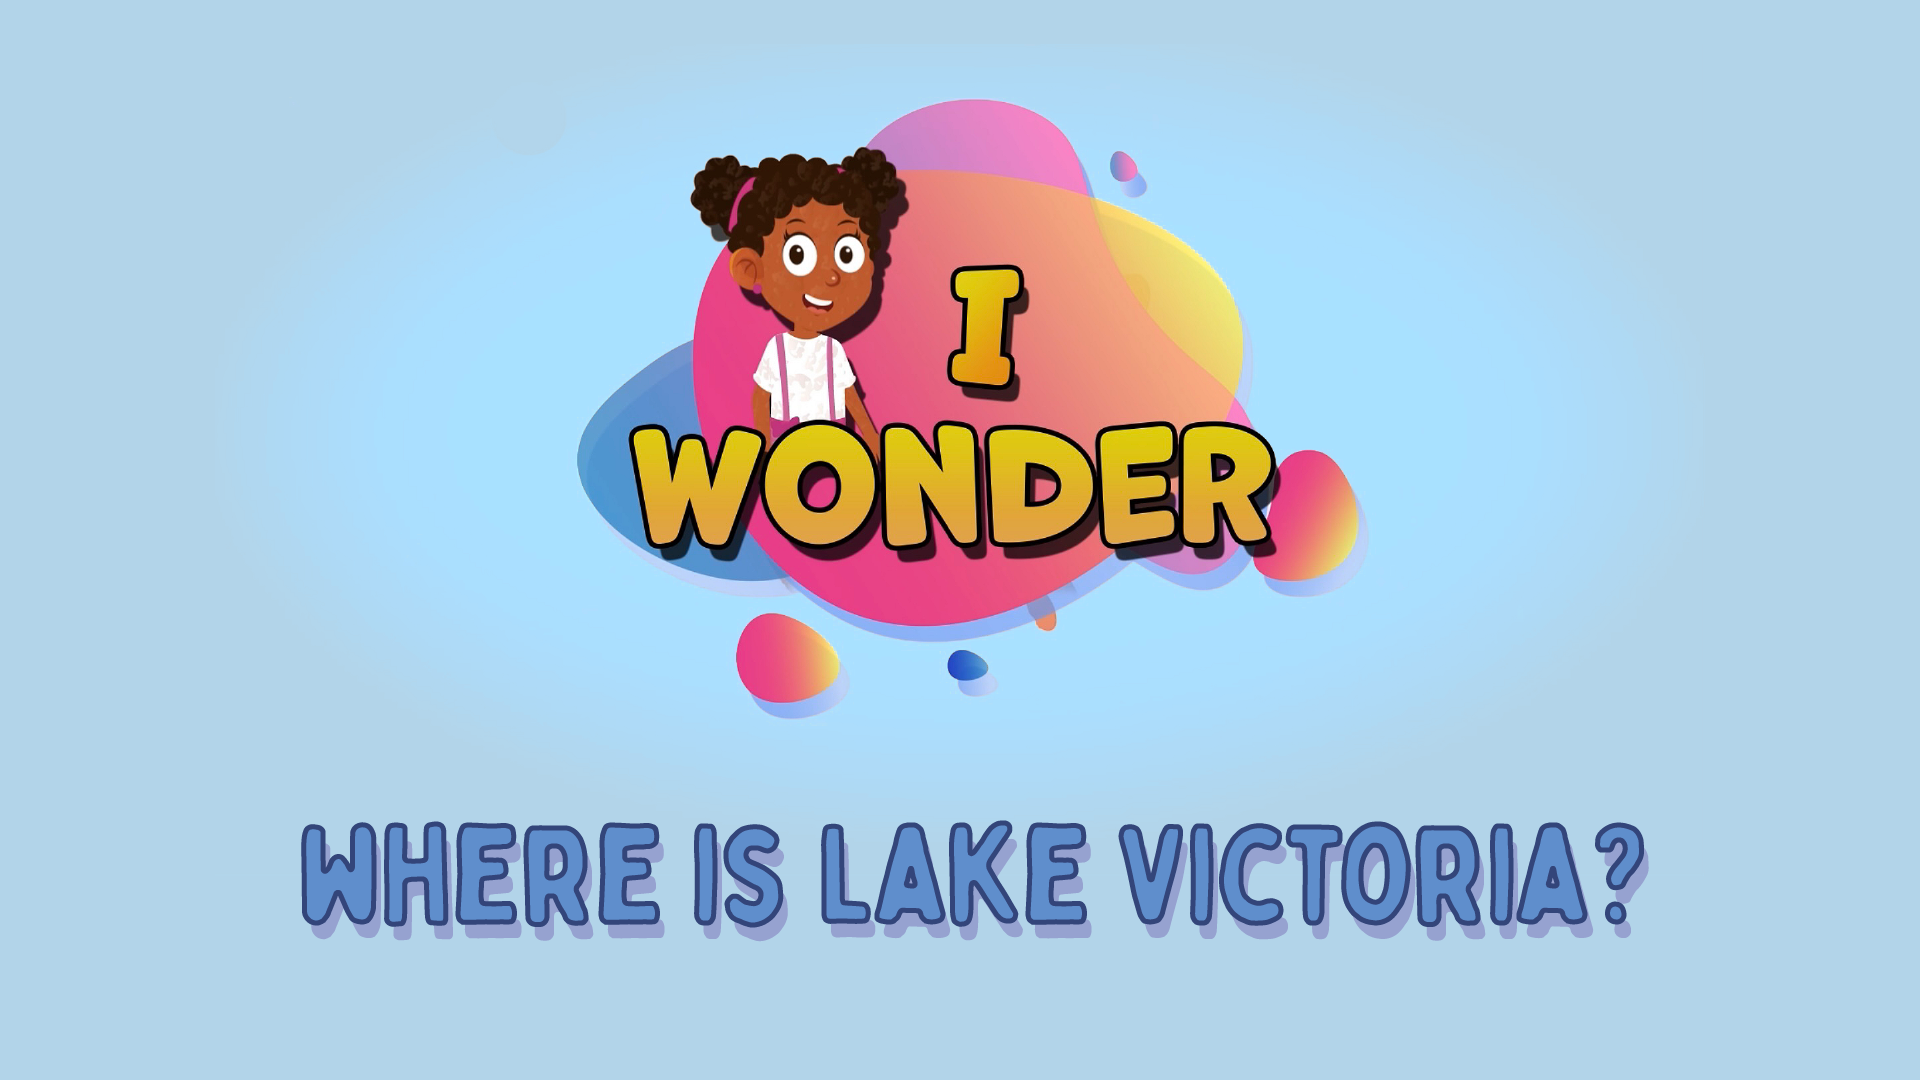 Where Is Lake Victoria?